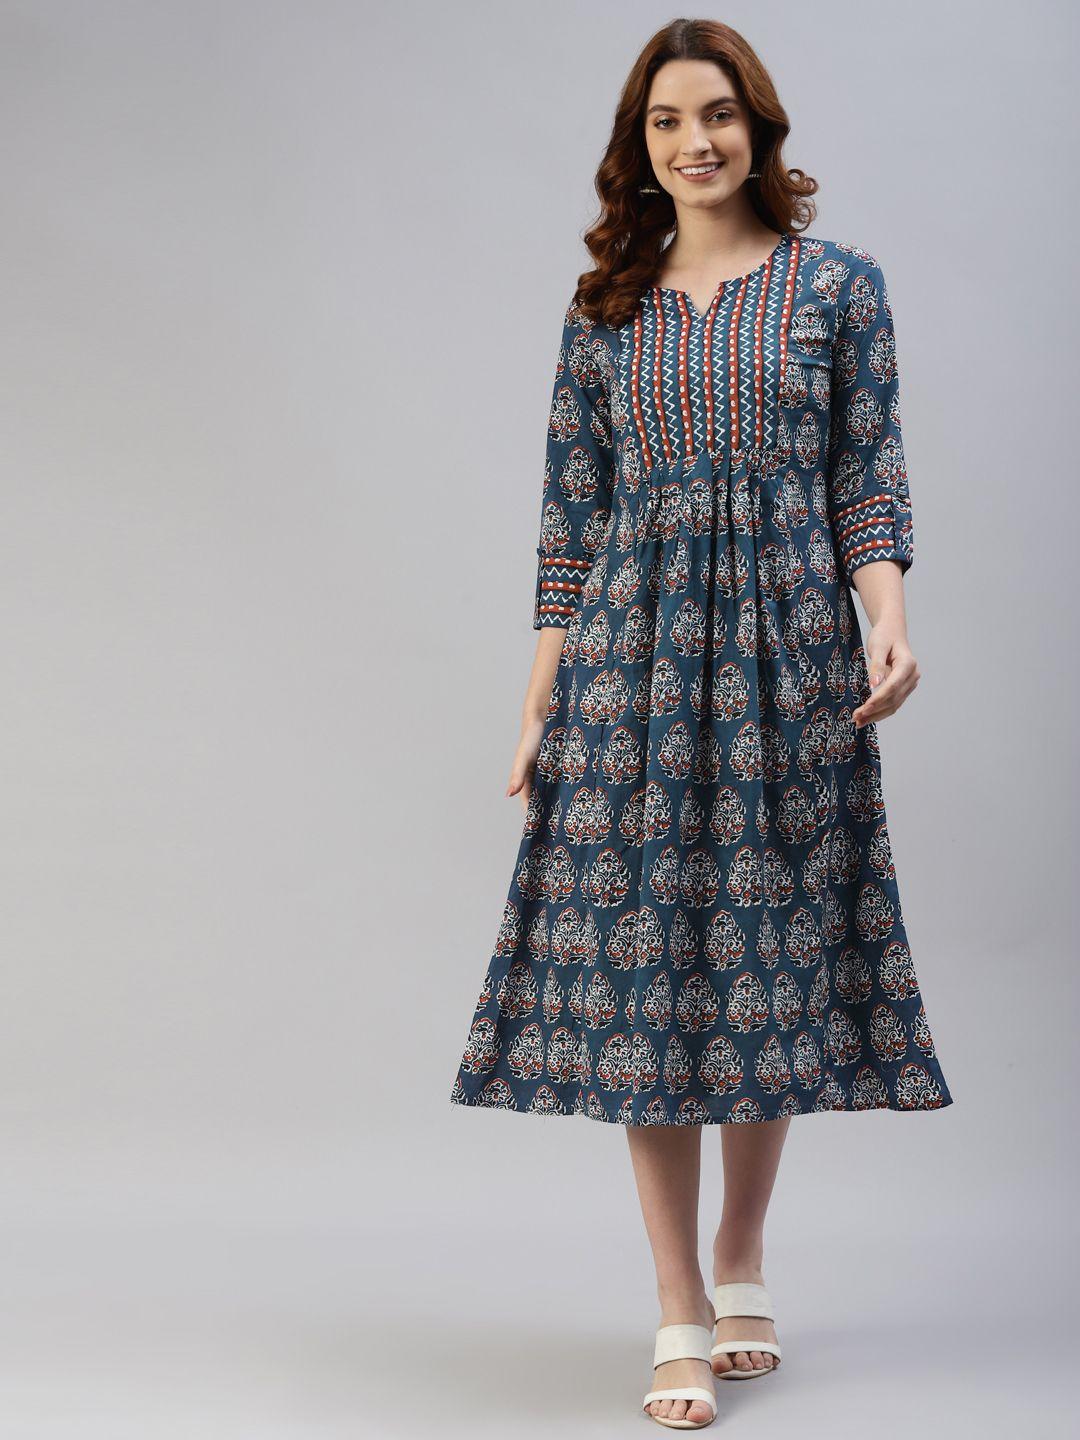 svarchi women teal blue & white ethnic motifs printed a-line midi dress